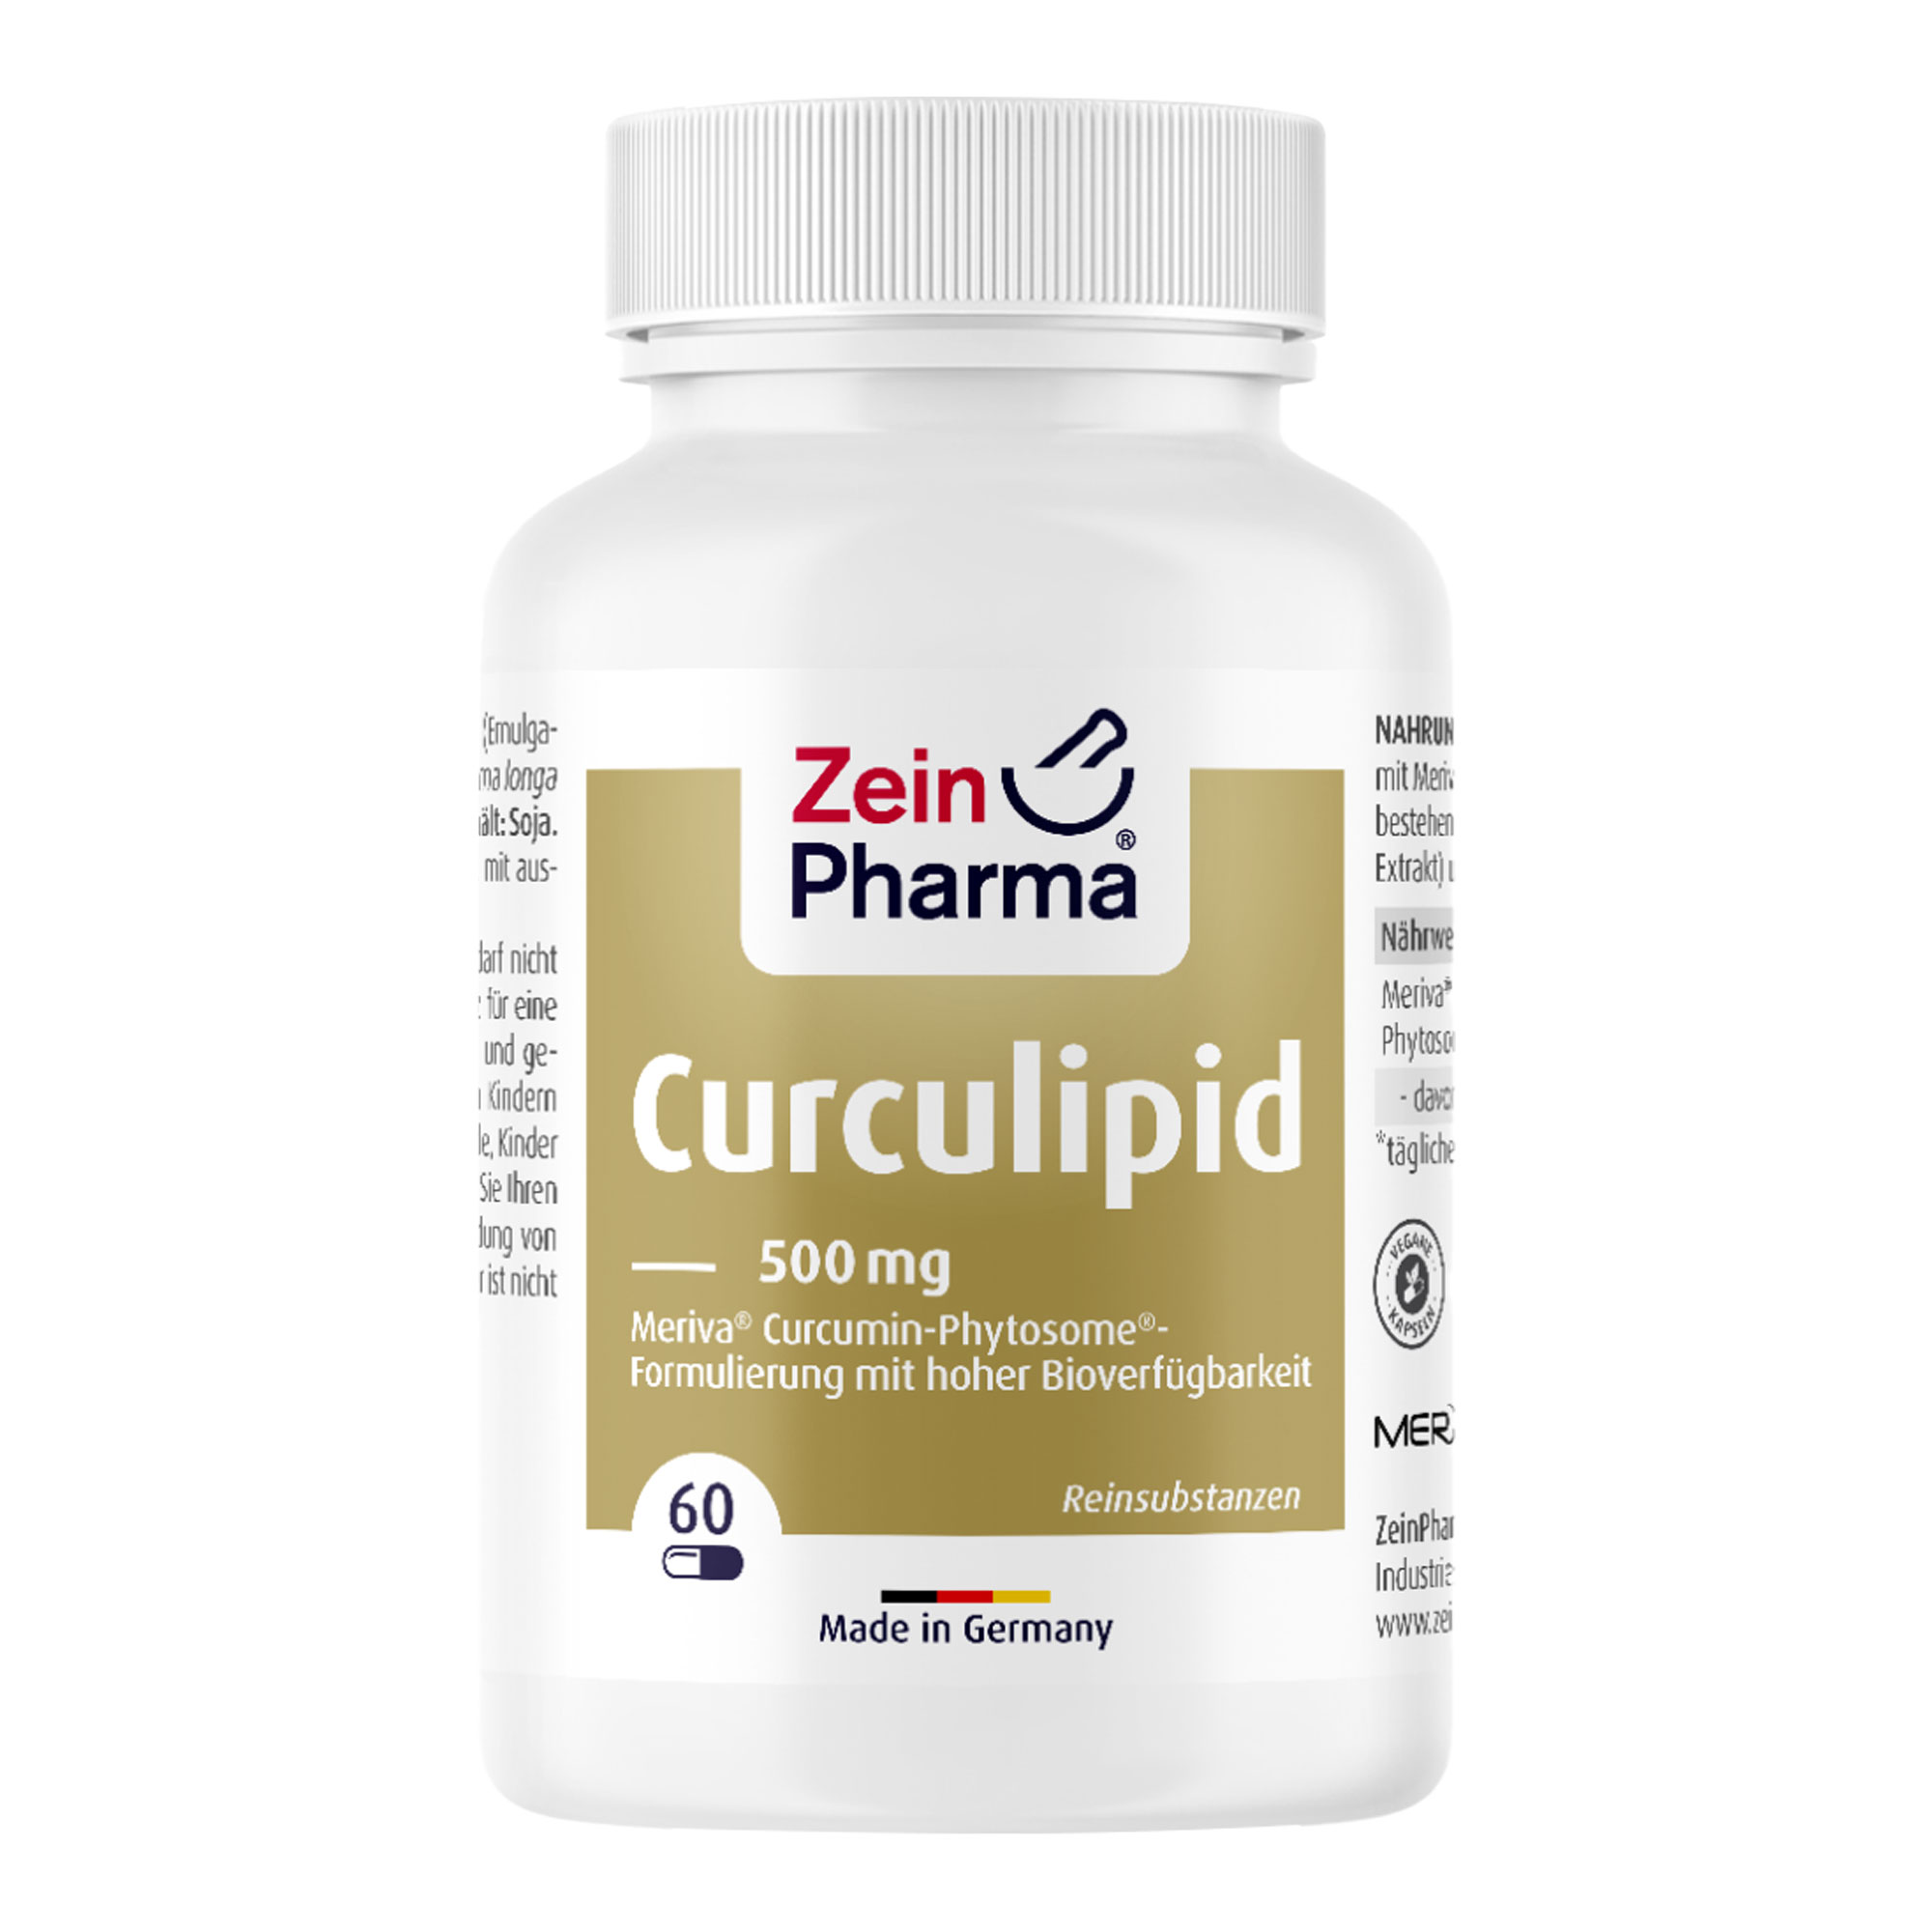 Nahrungsergänzungsmittel mit Meriva® Curcumin-Phytosome®-Formulierung, bestehend aus Curcuminoiden (aus Curcuma longa Extrakt) und Lecithin in veganen Kapseln.